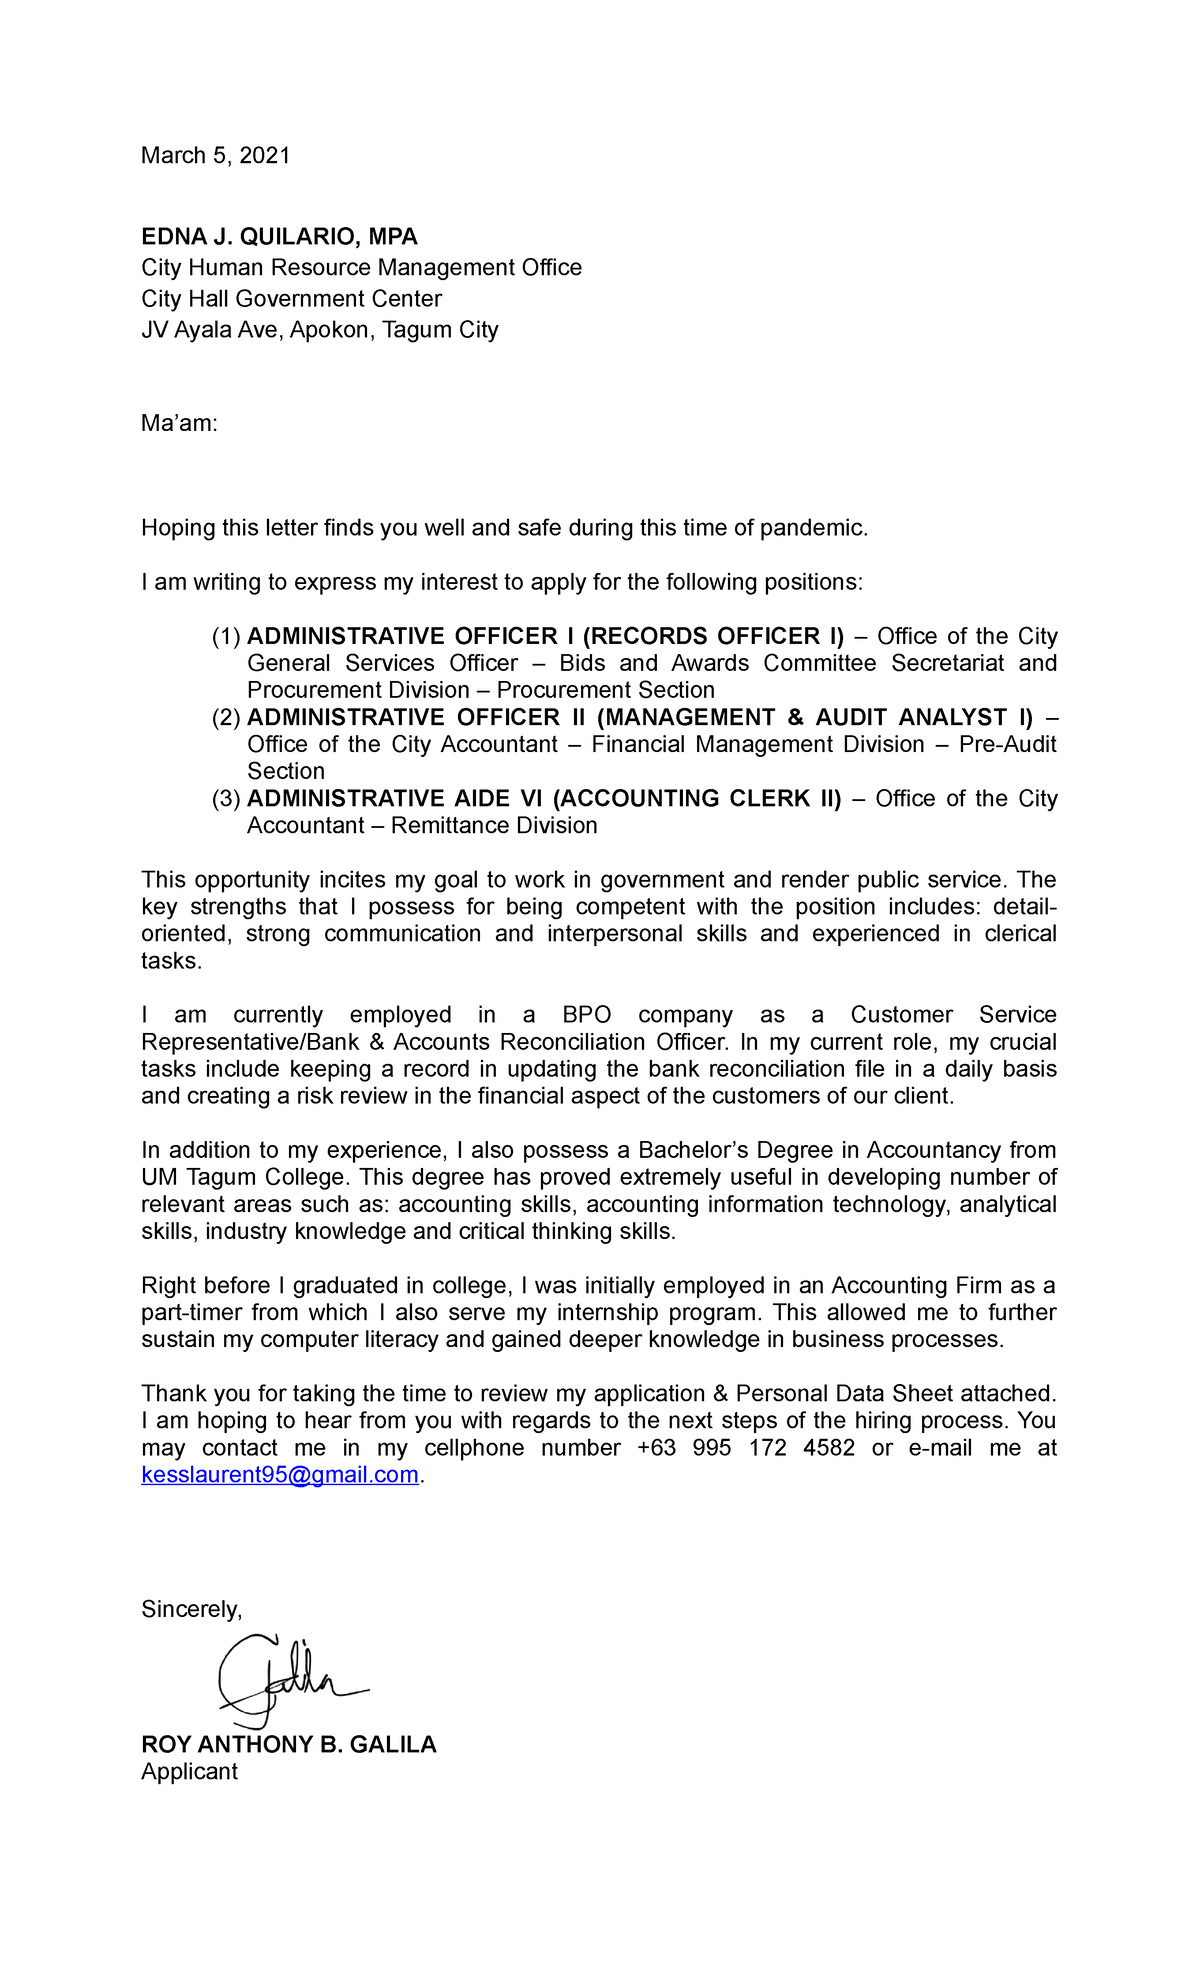 application letter for lgu employment